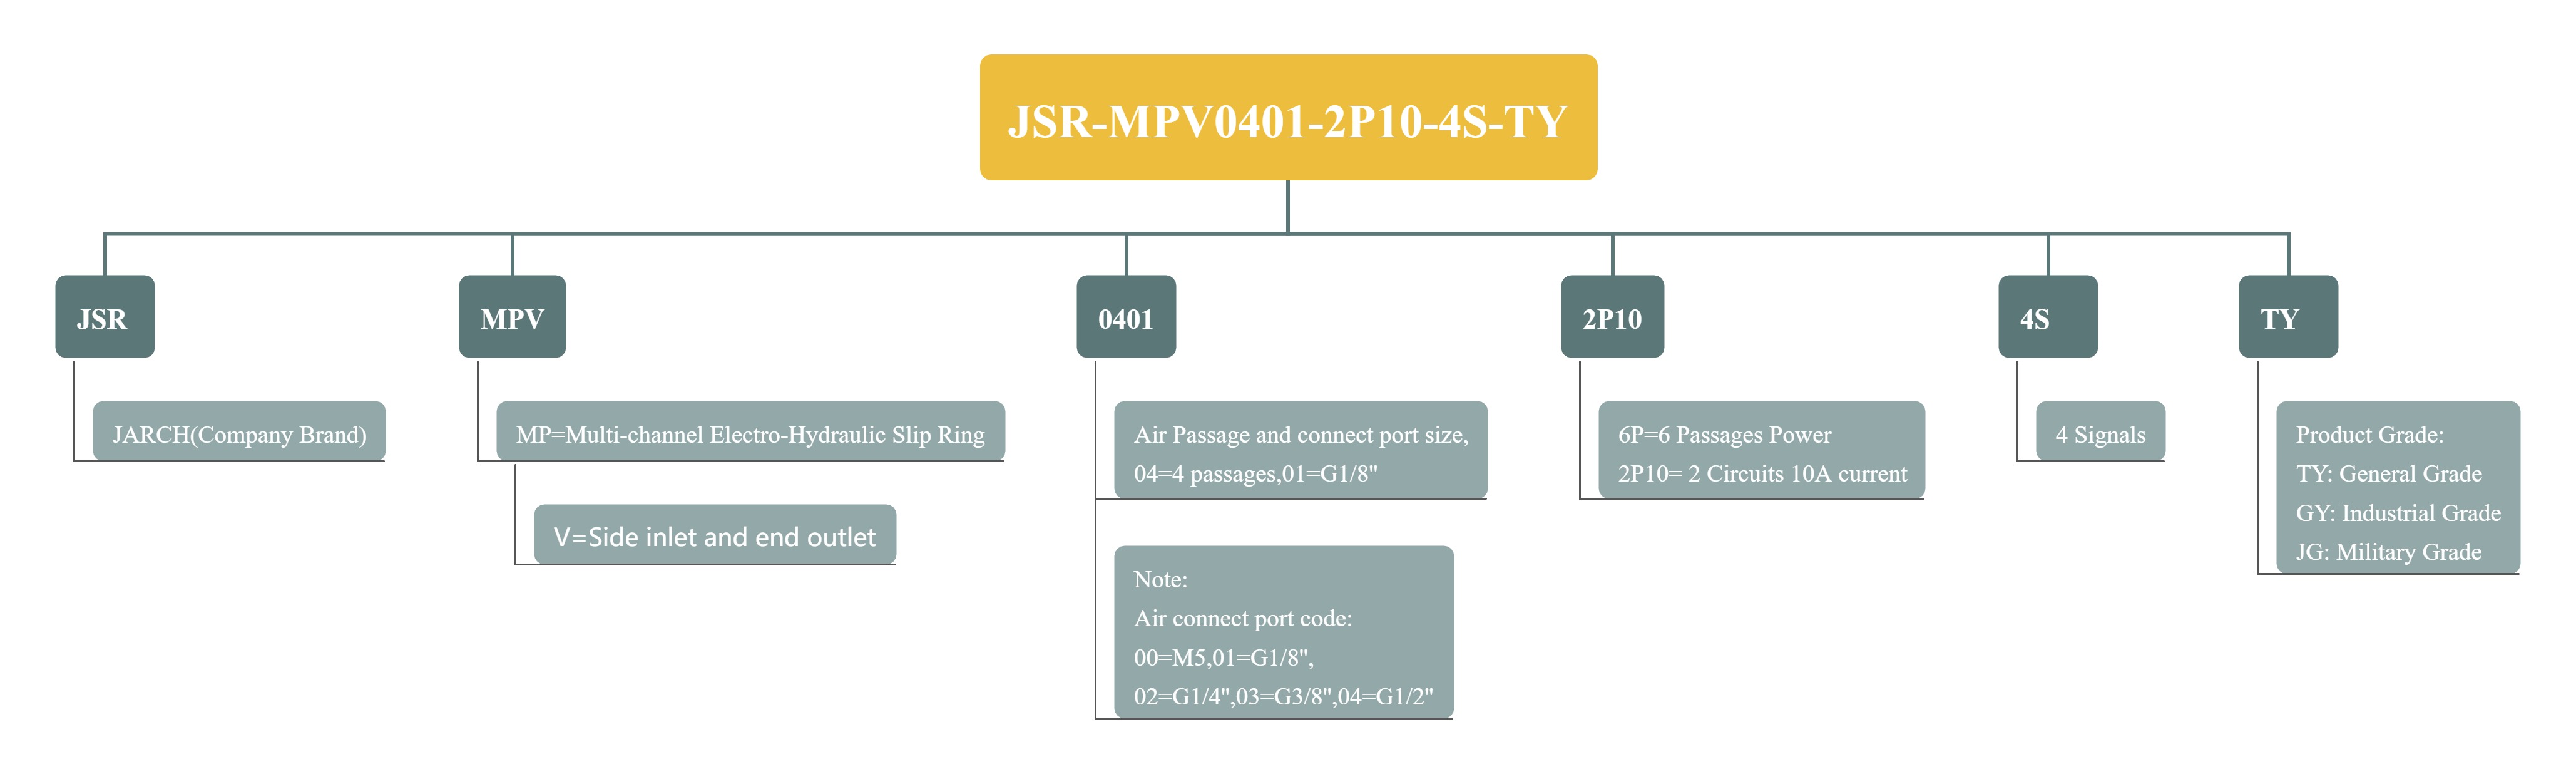 JSR-MPV0401-2P10-4S-TY.jpg